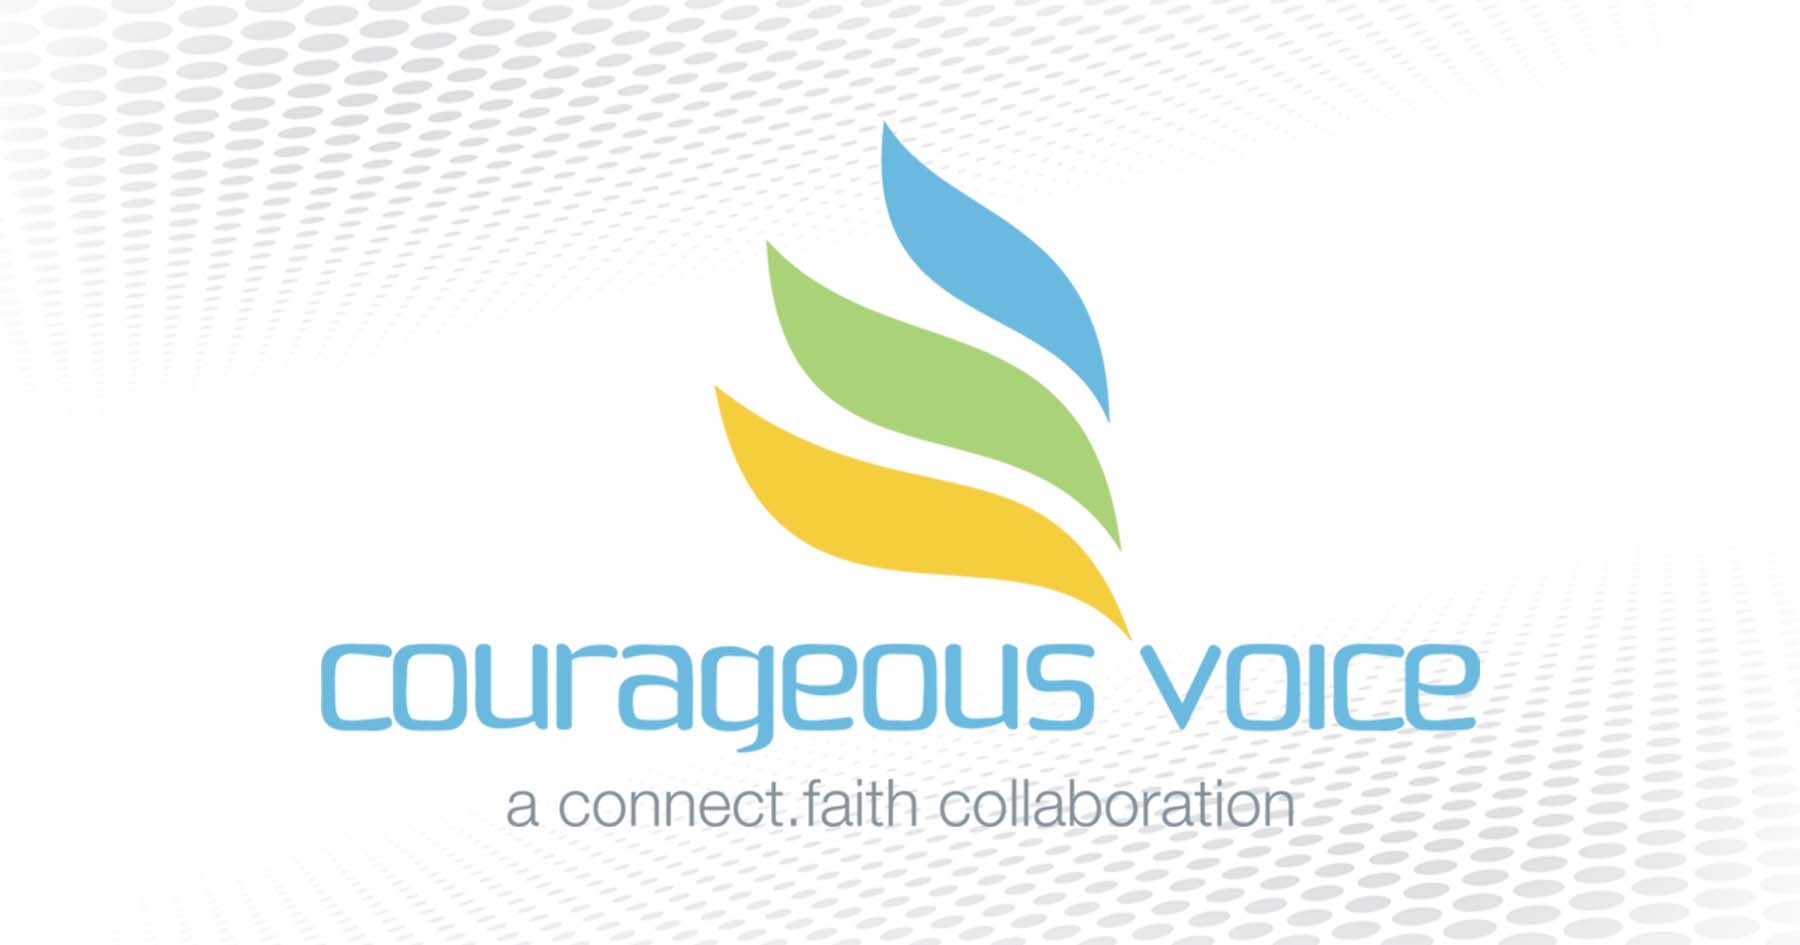 Osian Roberts | “Courageous Voice” | connect.faith